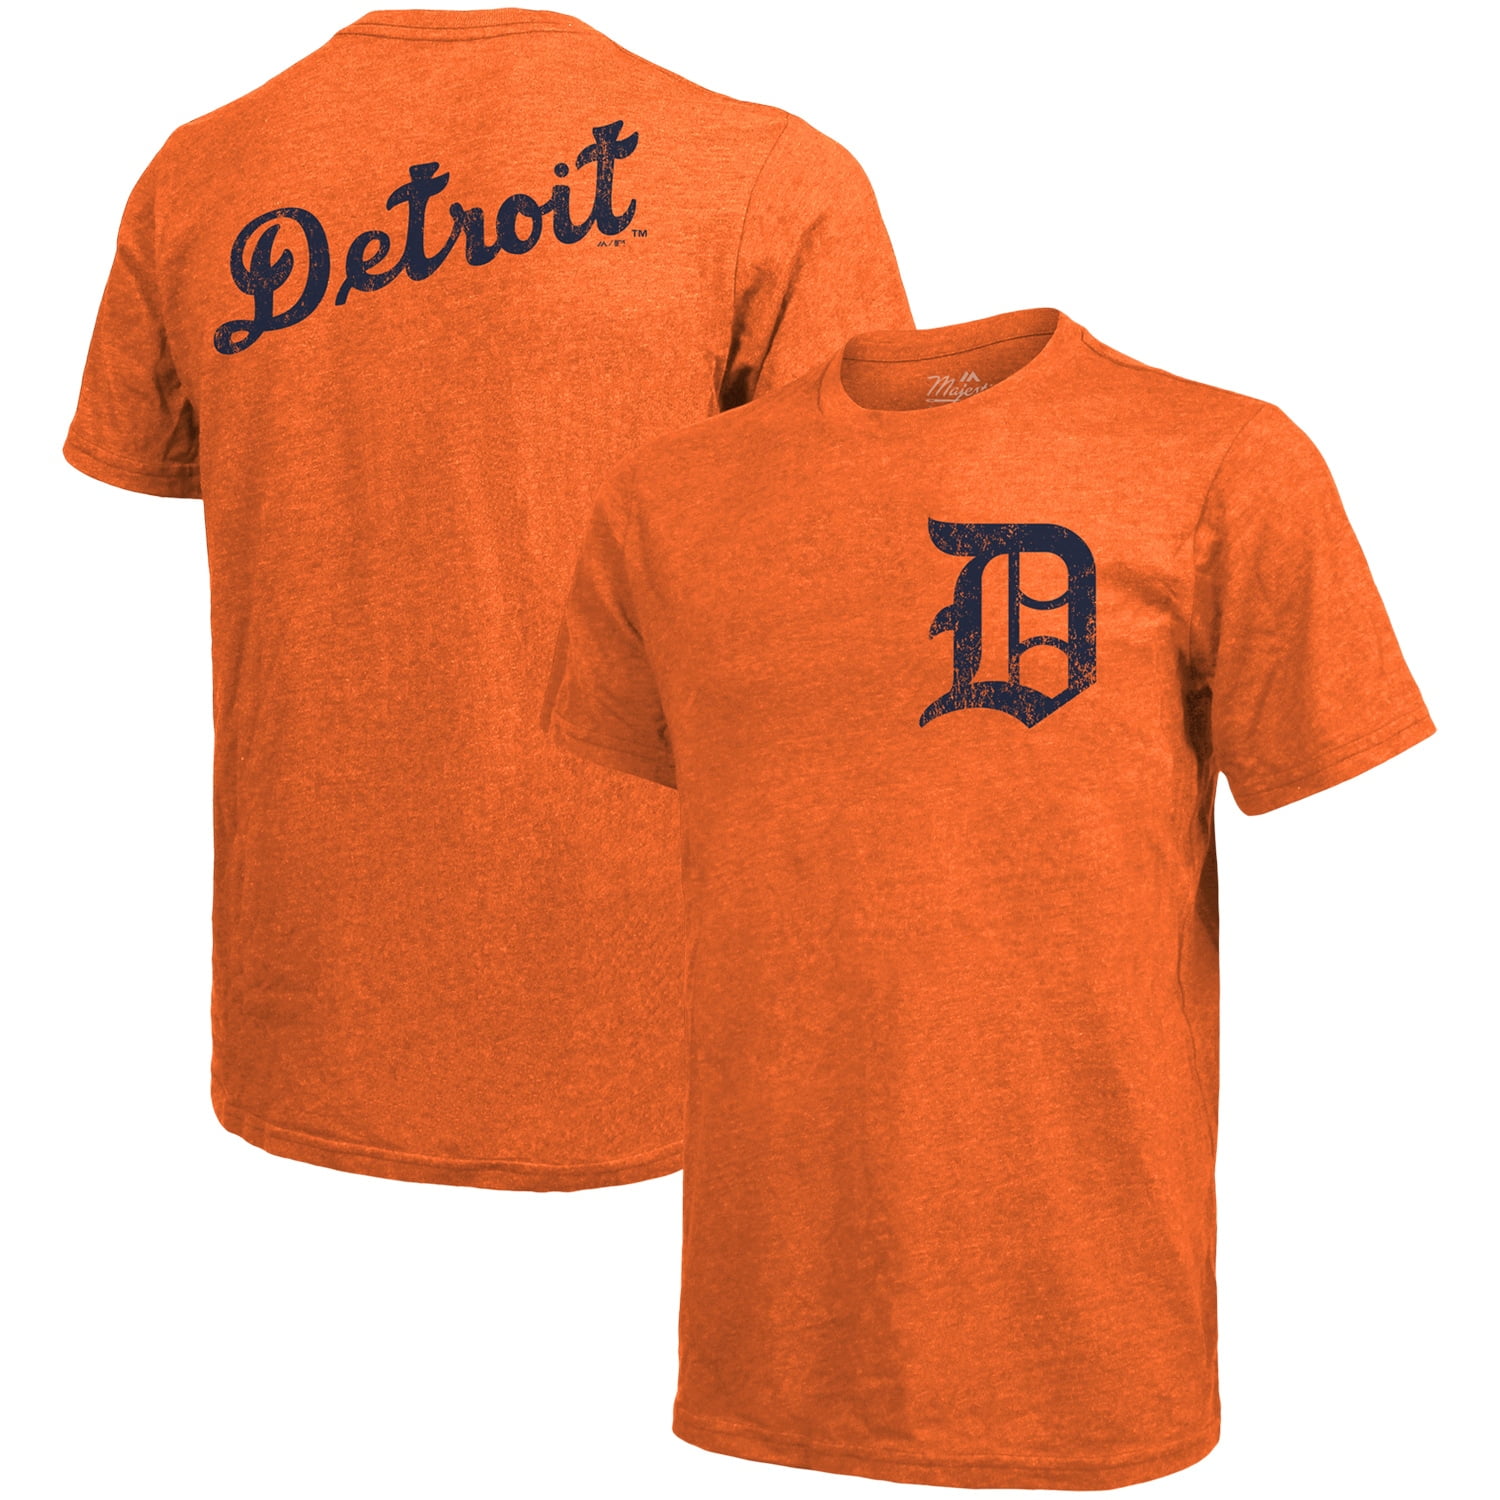 Men's Majestic Threads Orange Detroit Tigers Throwback Logo Tri-Blend T- Shirt 